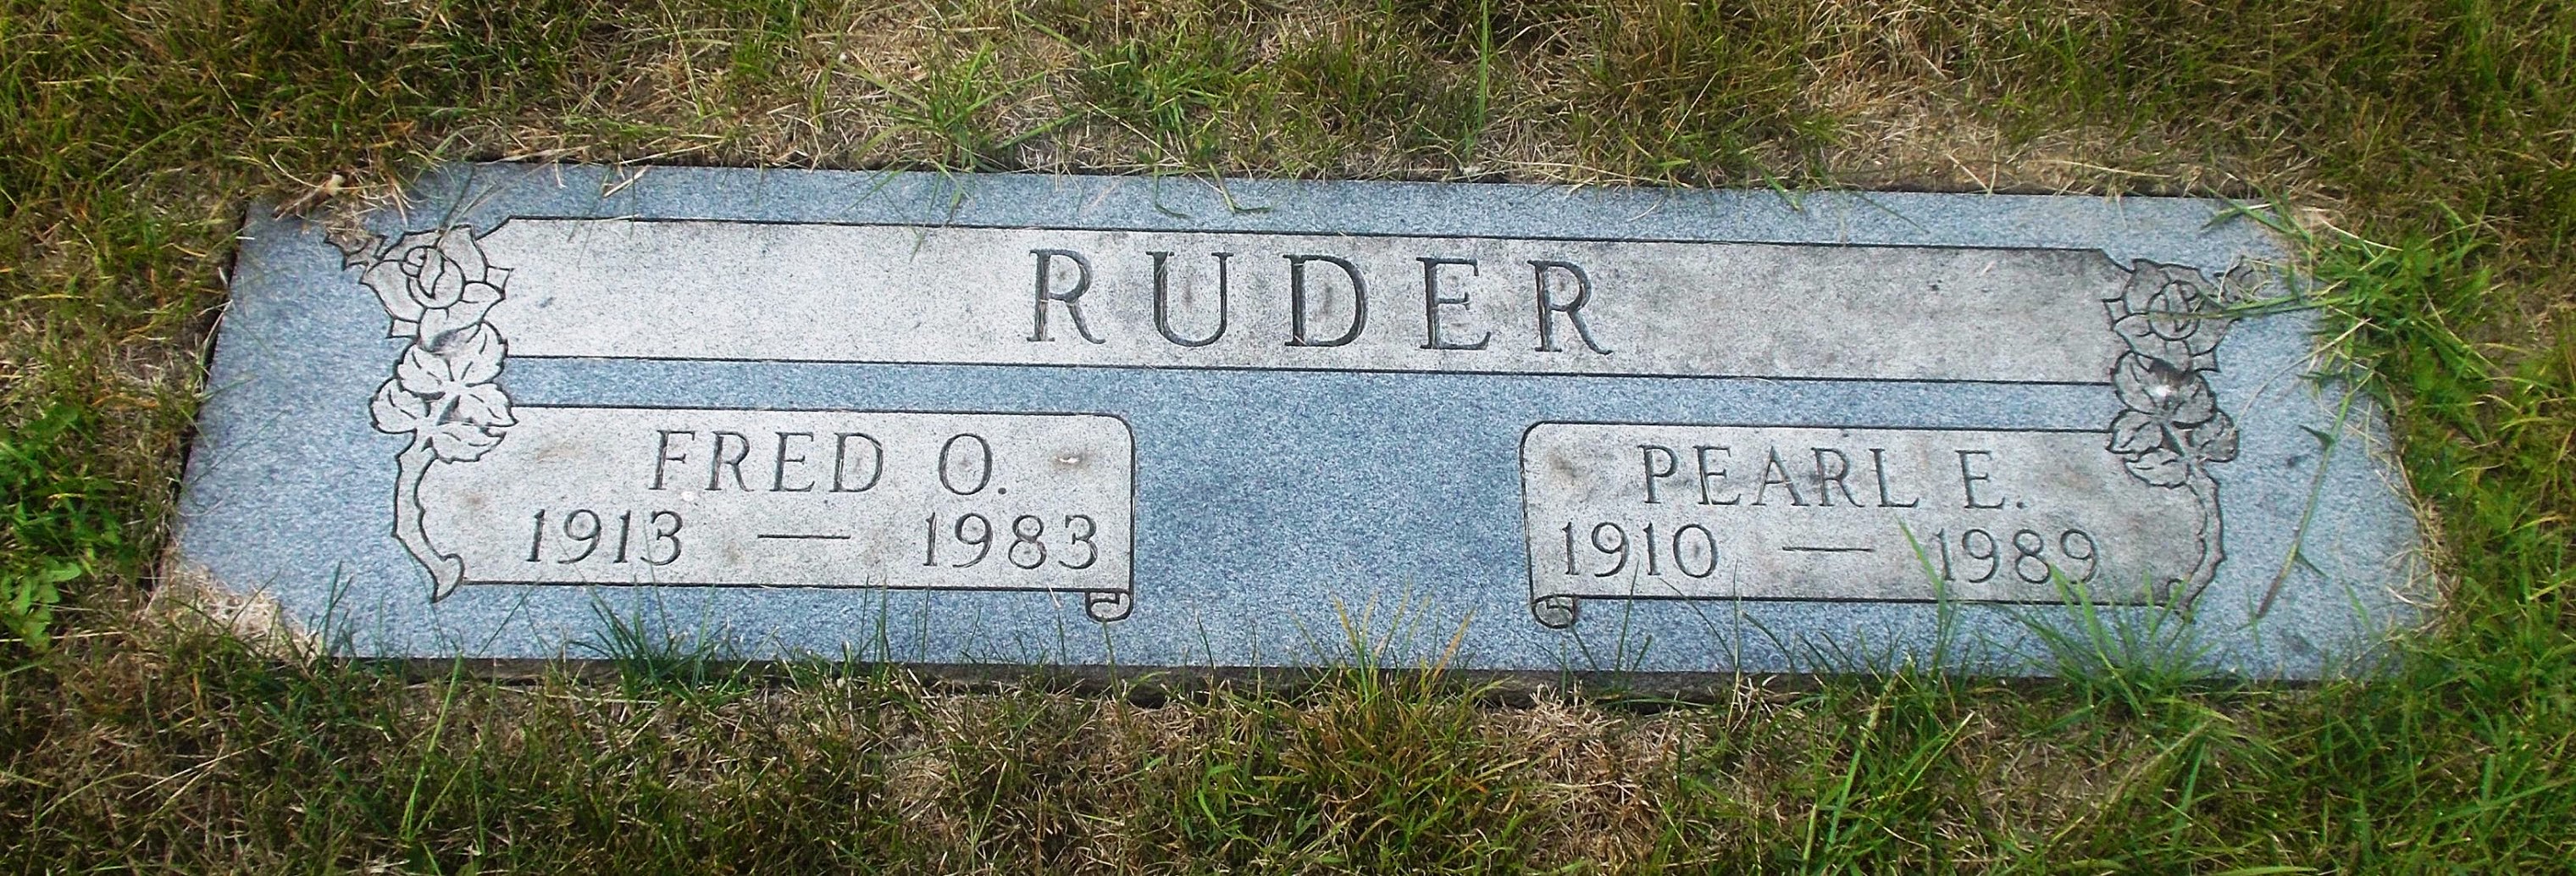 Fred O Ruder